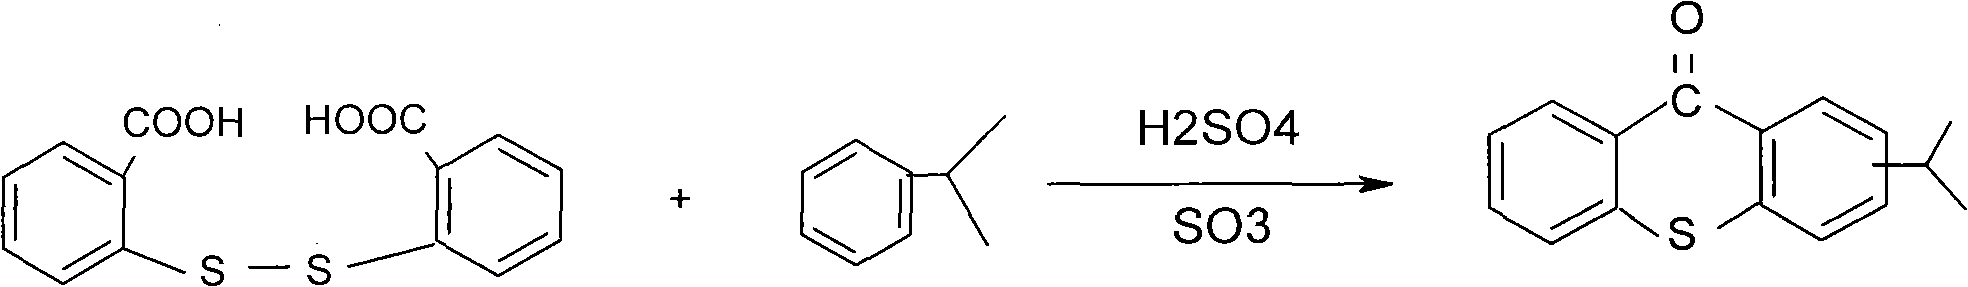 Preparation process of 2-isopropylthioxanthone